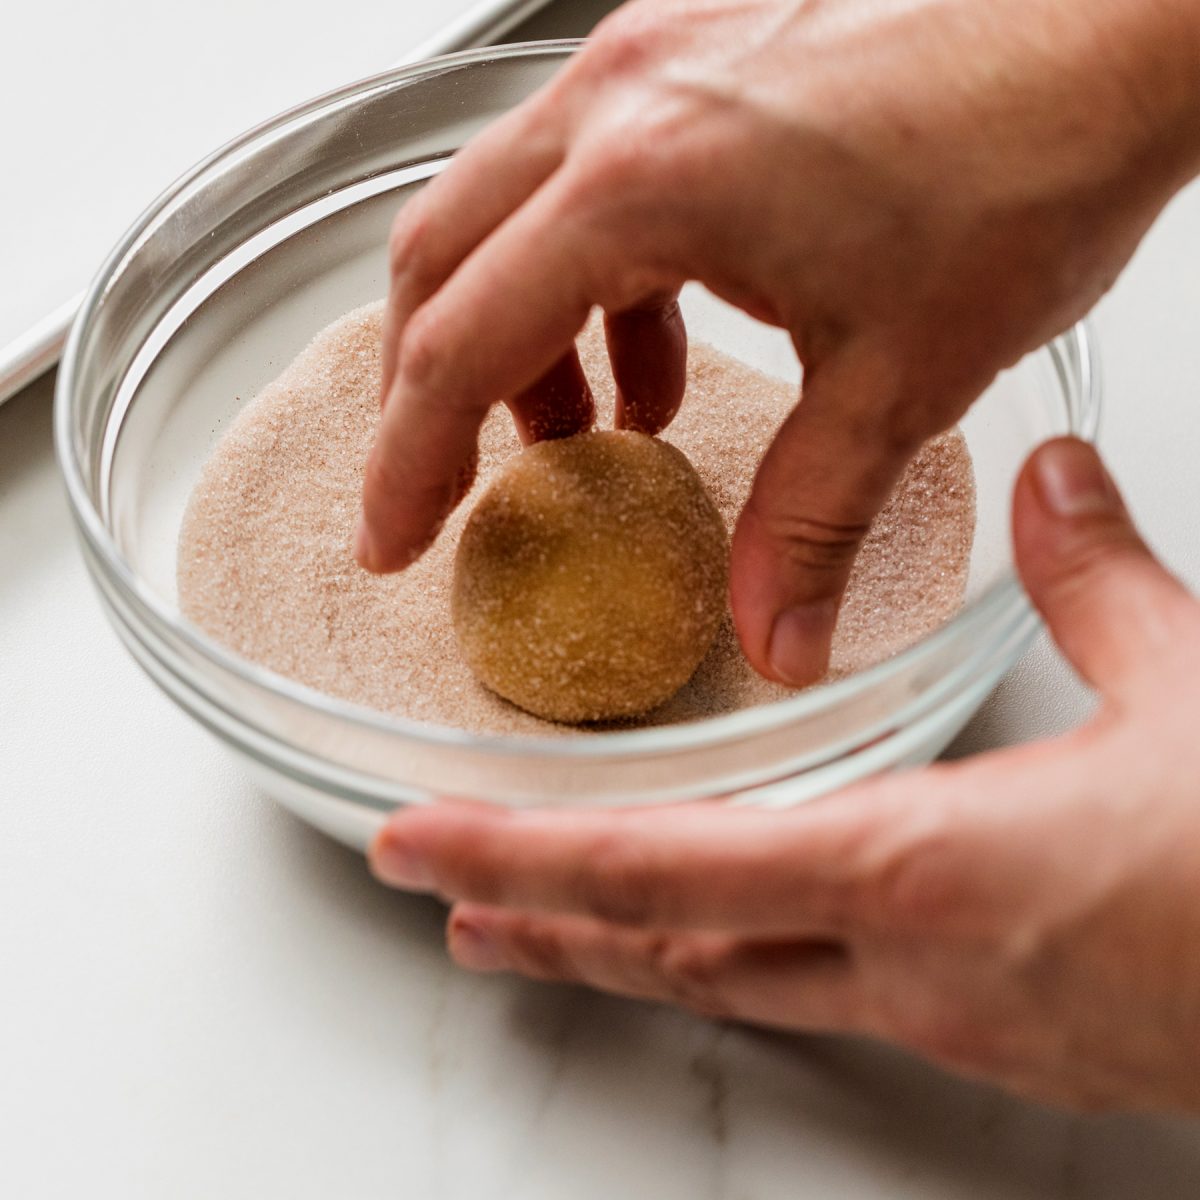 Rolling the dough balls in cinnamon sugar